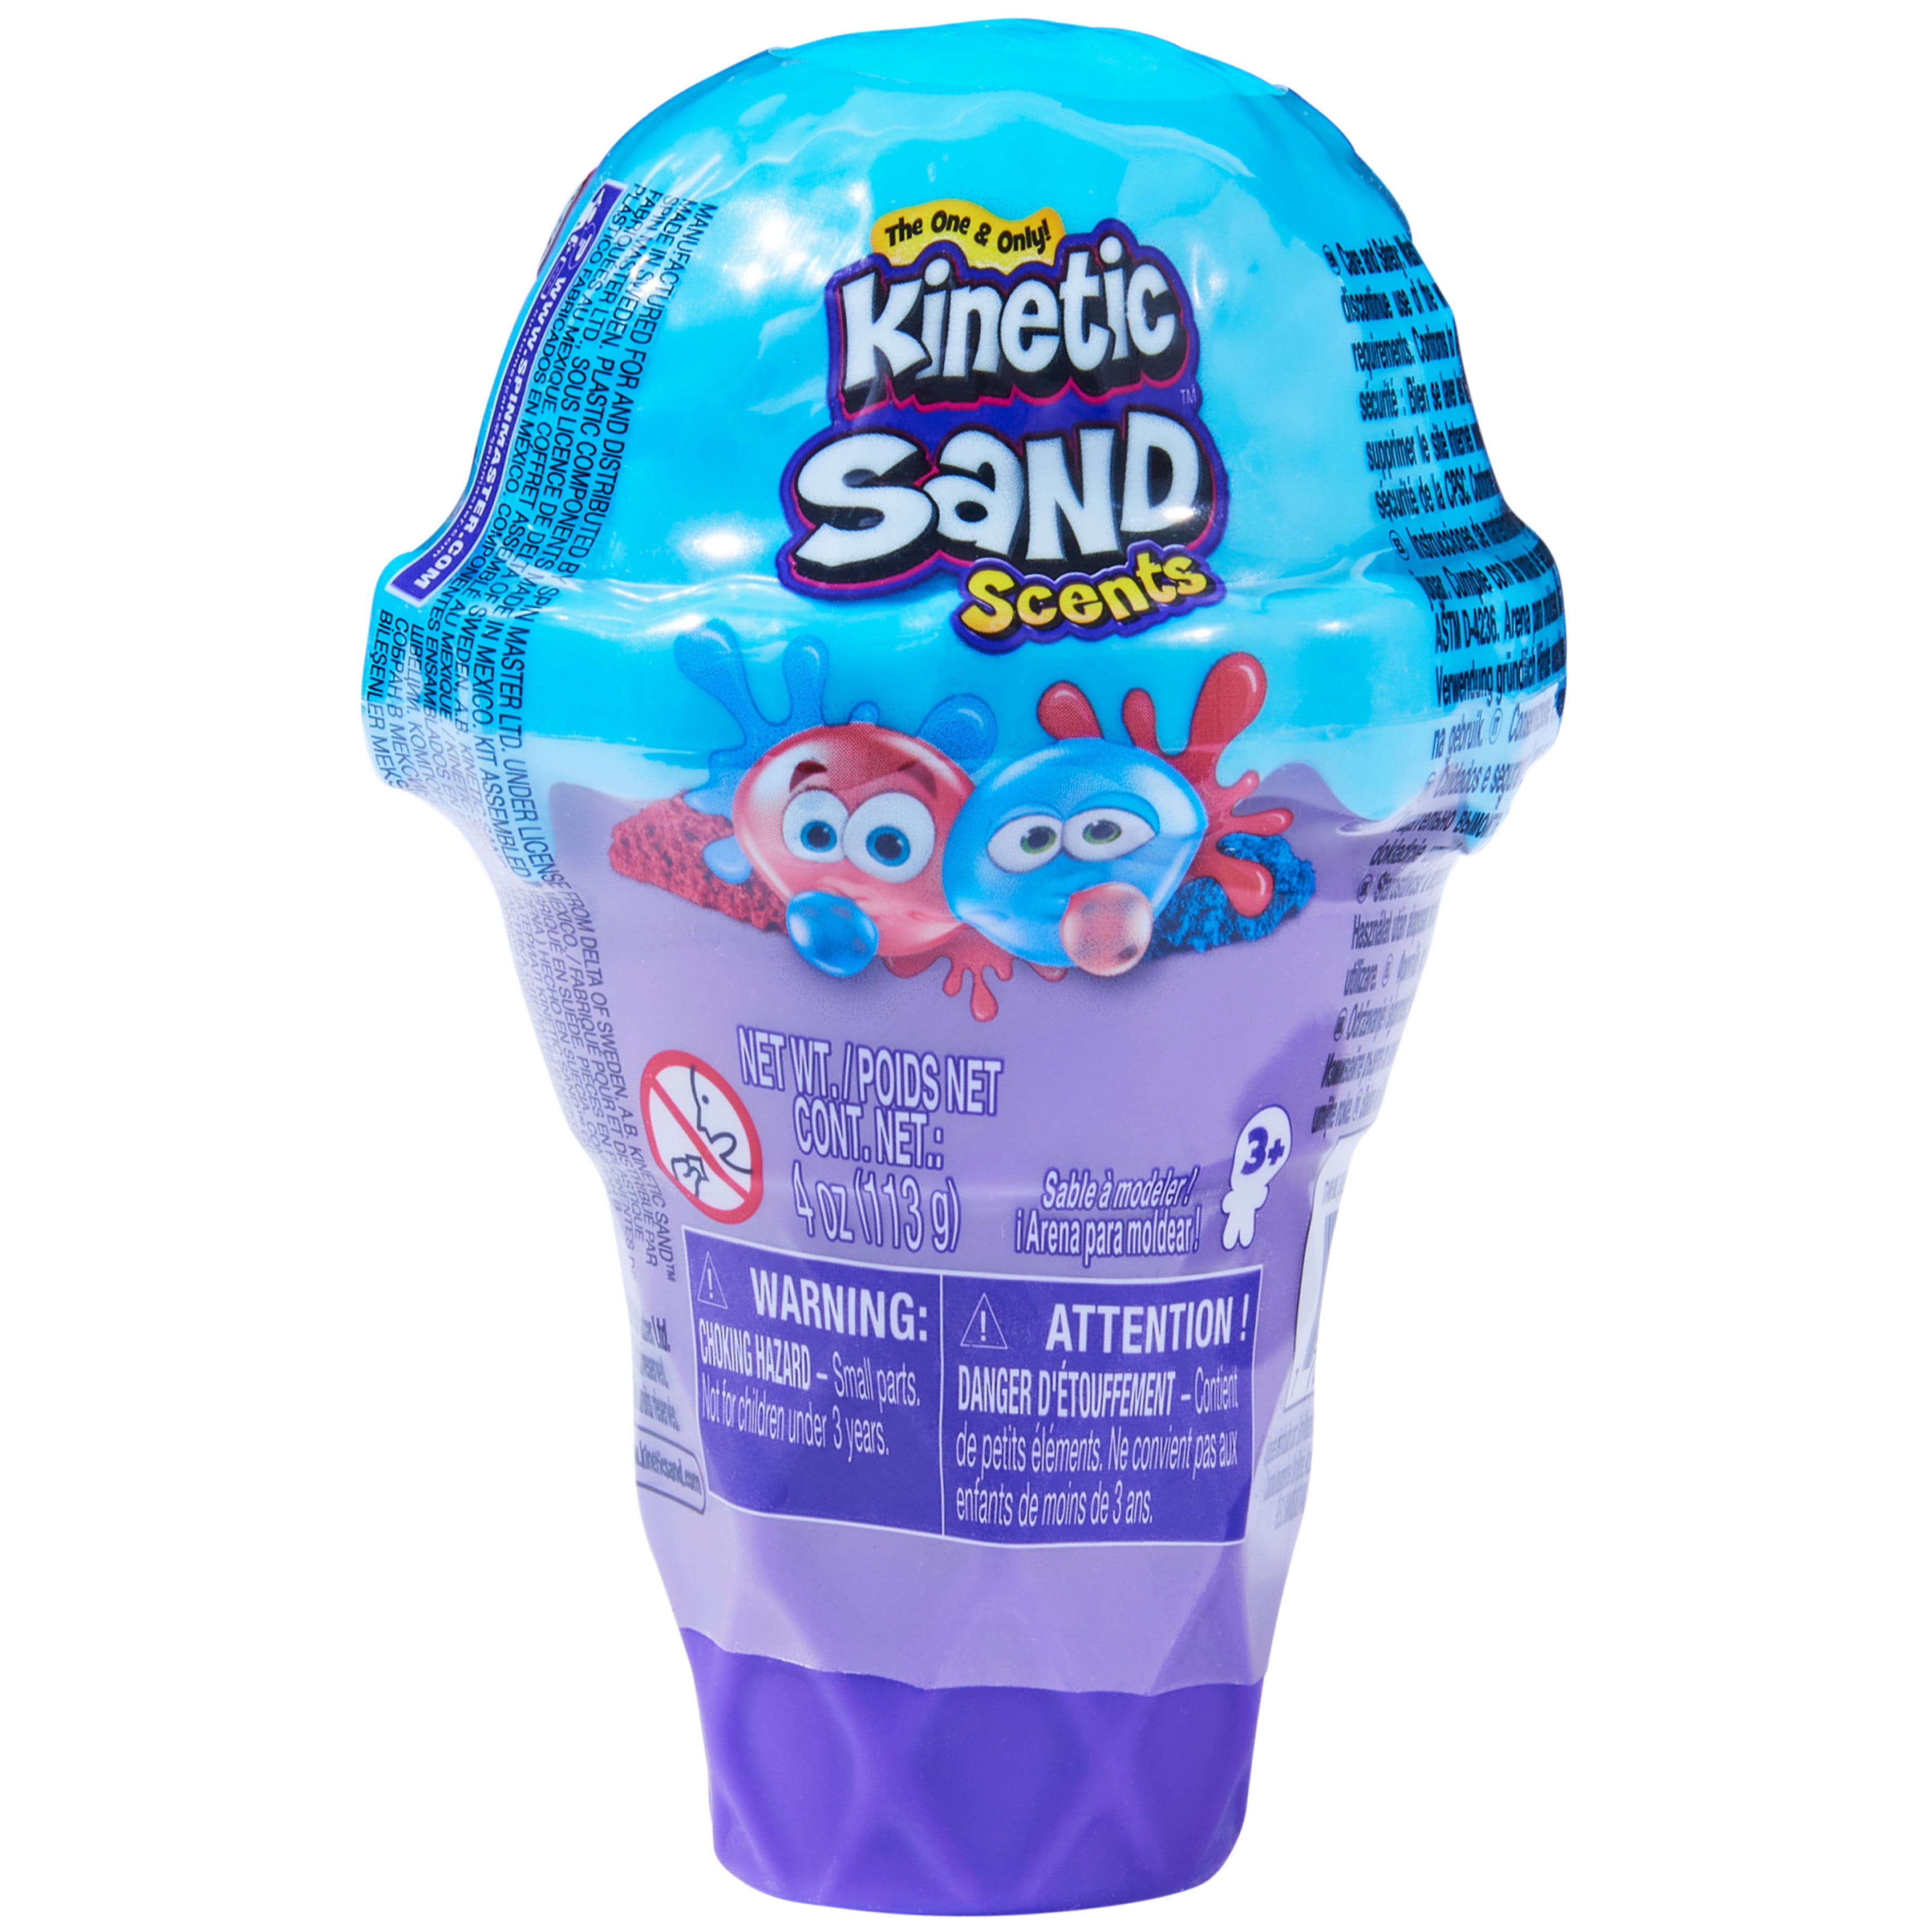 Kinetic Sand Scents, 4oz Bubblegum Ice Cream Cone Container